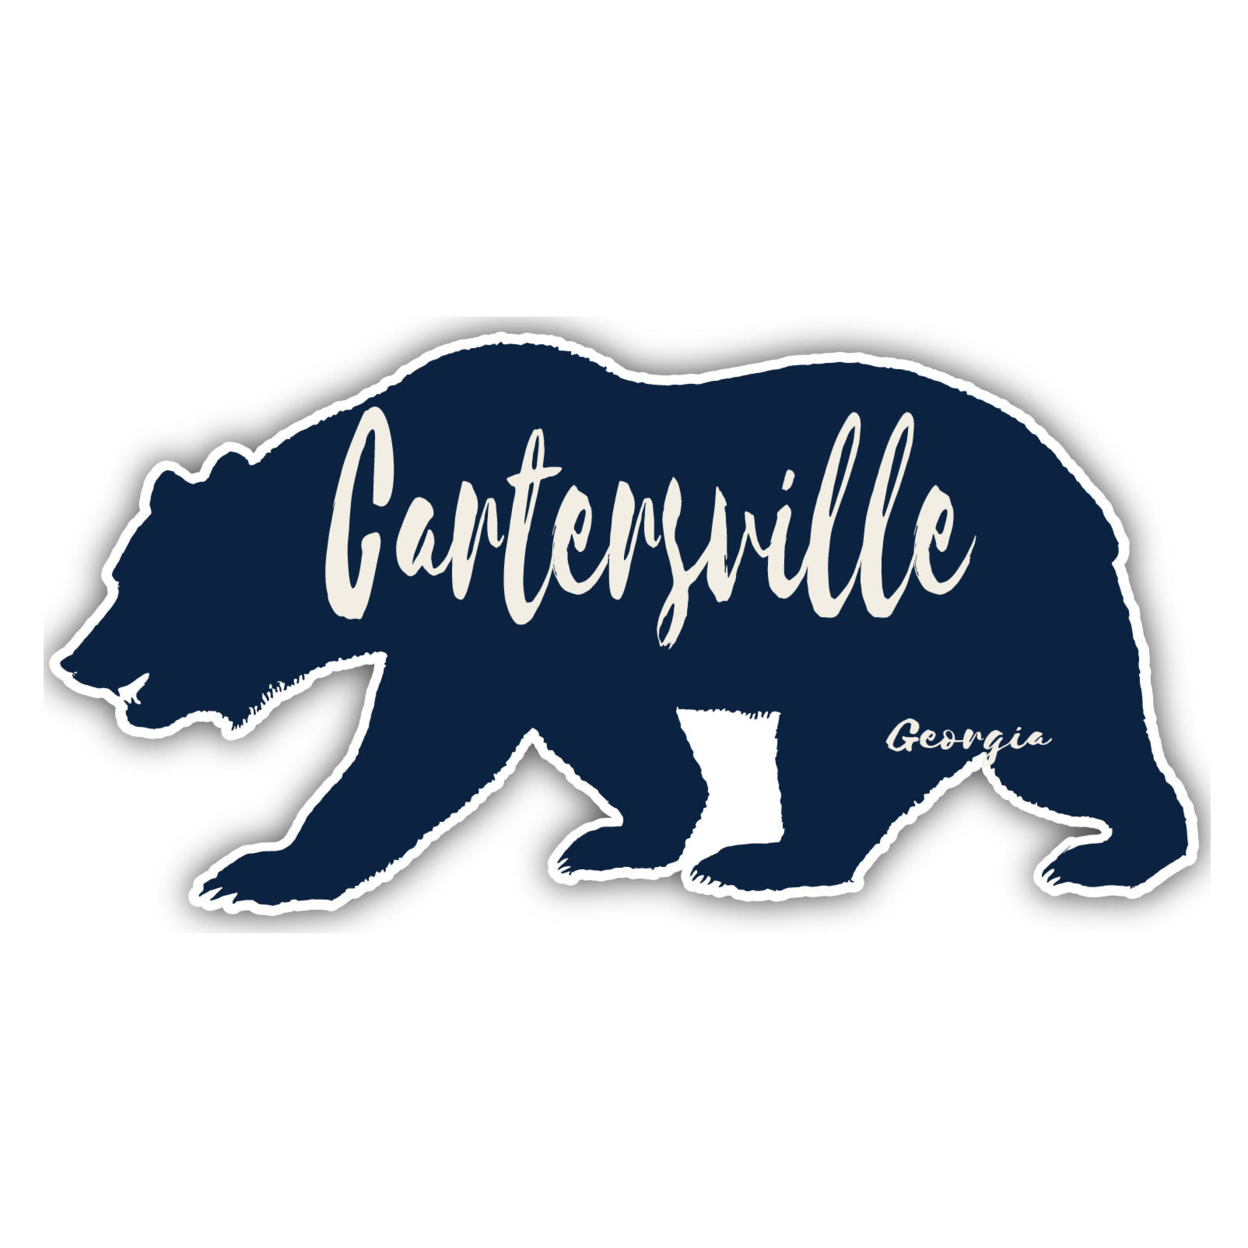 Cartersville Georgia Souvenir Decorative Stickers (Choose Theme And Size) - Single Unit, 2-Inch, Bear